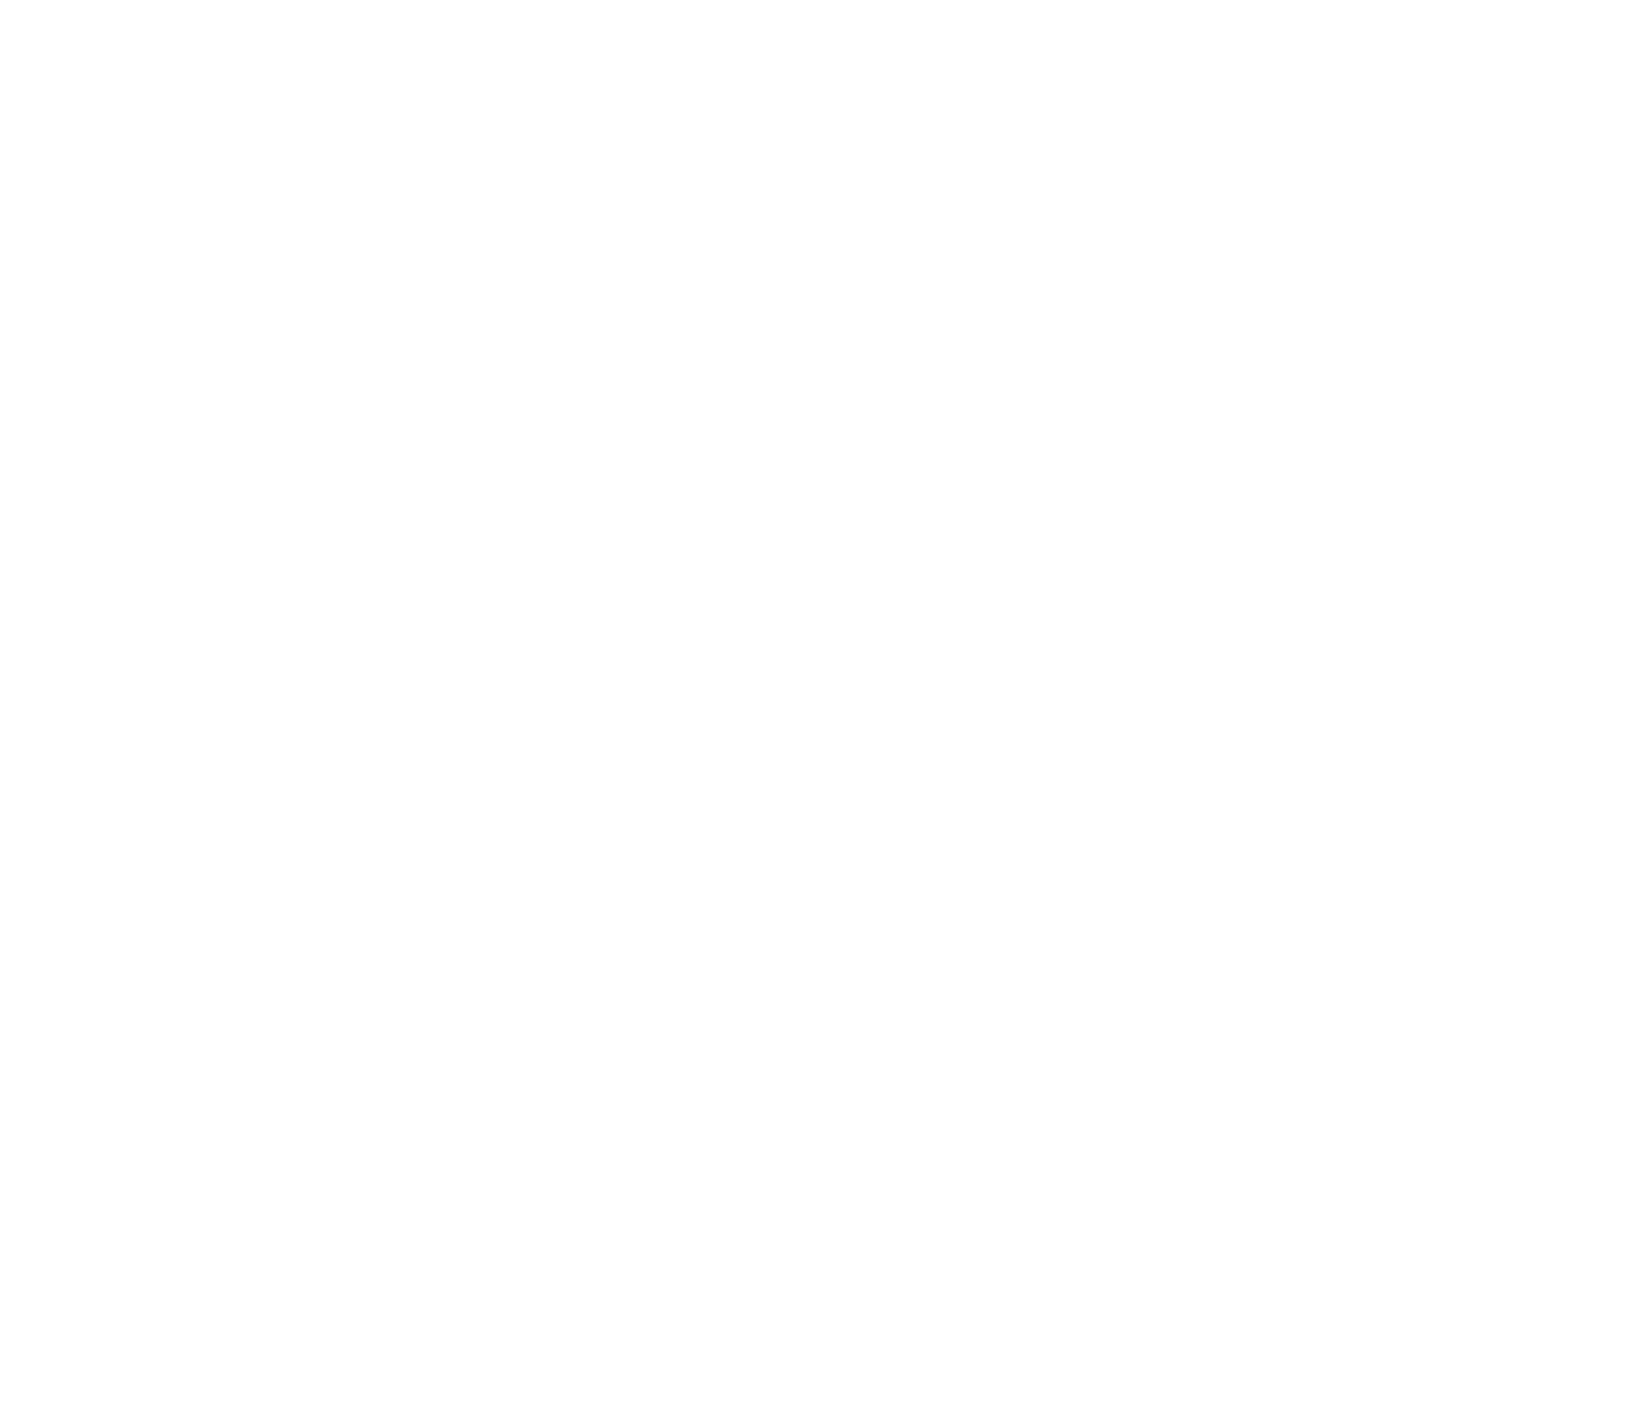 SeaWorld Entertainment logo for dark backgrounds (transparent PNG)